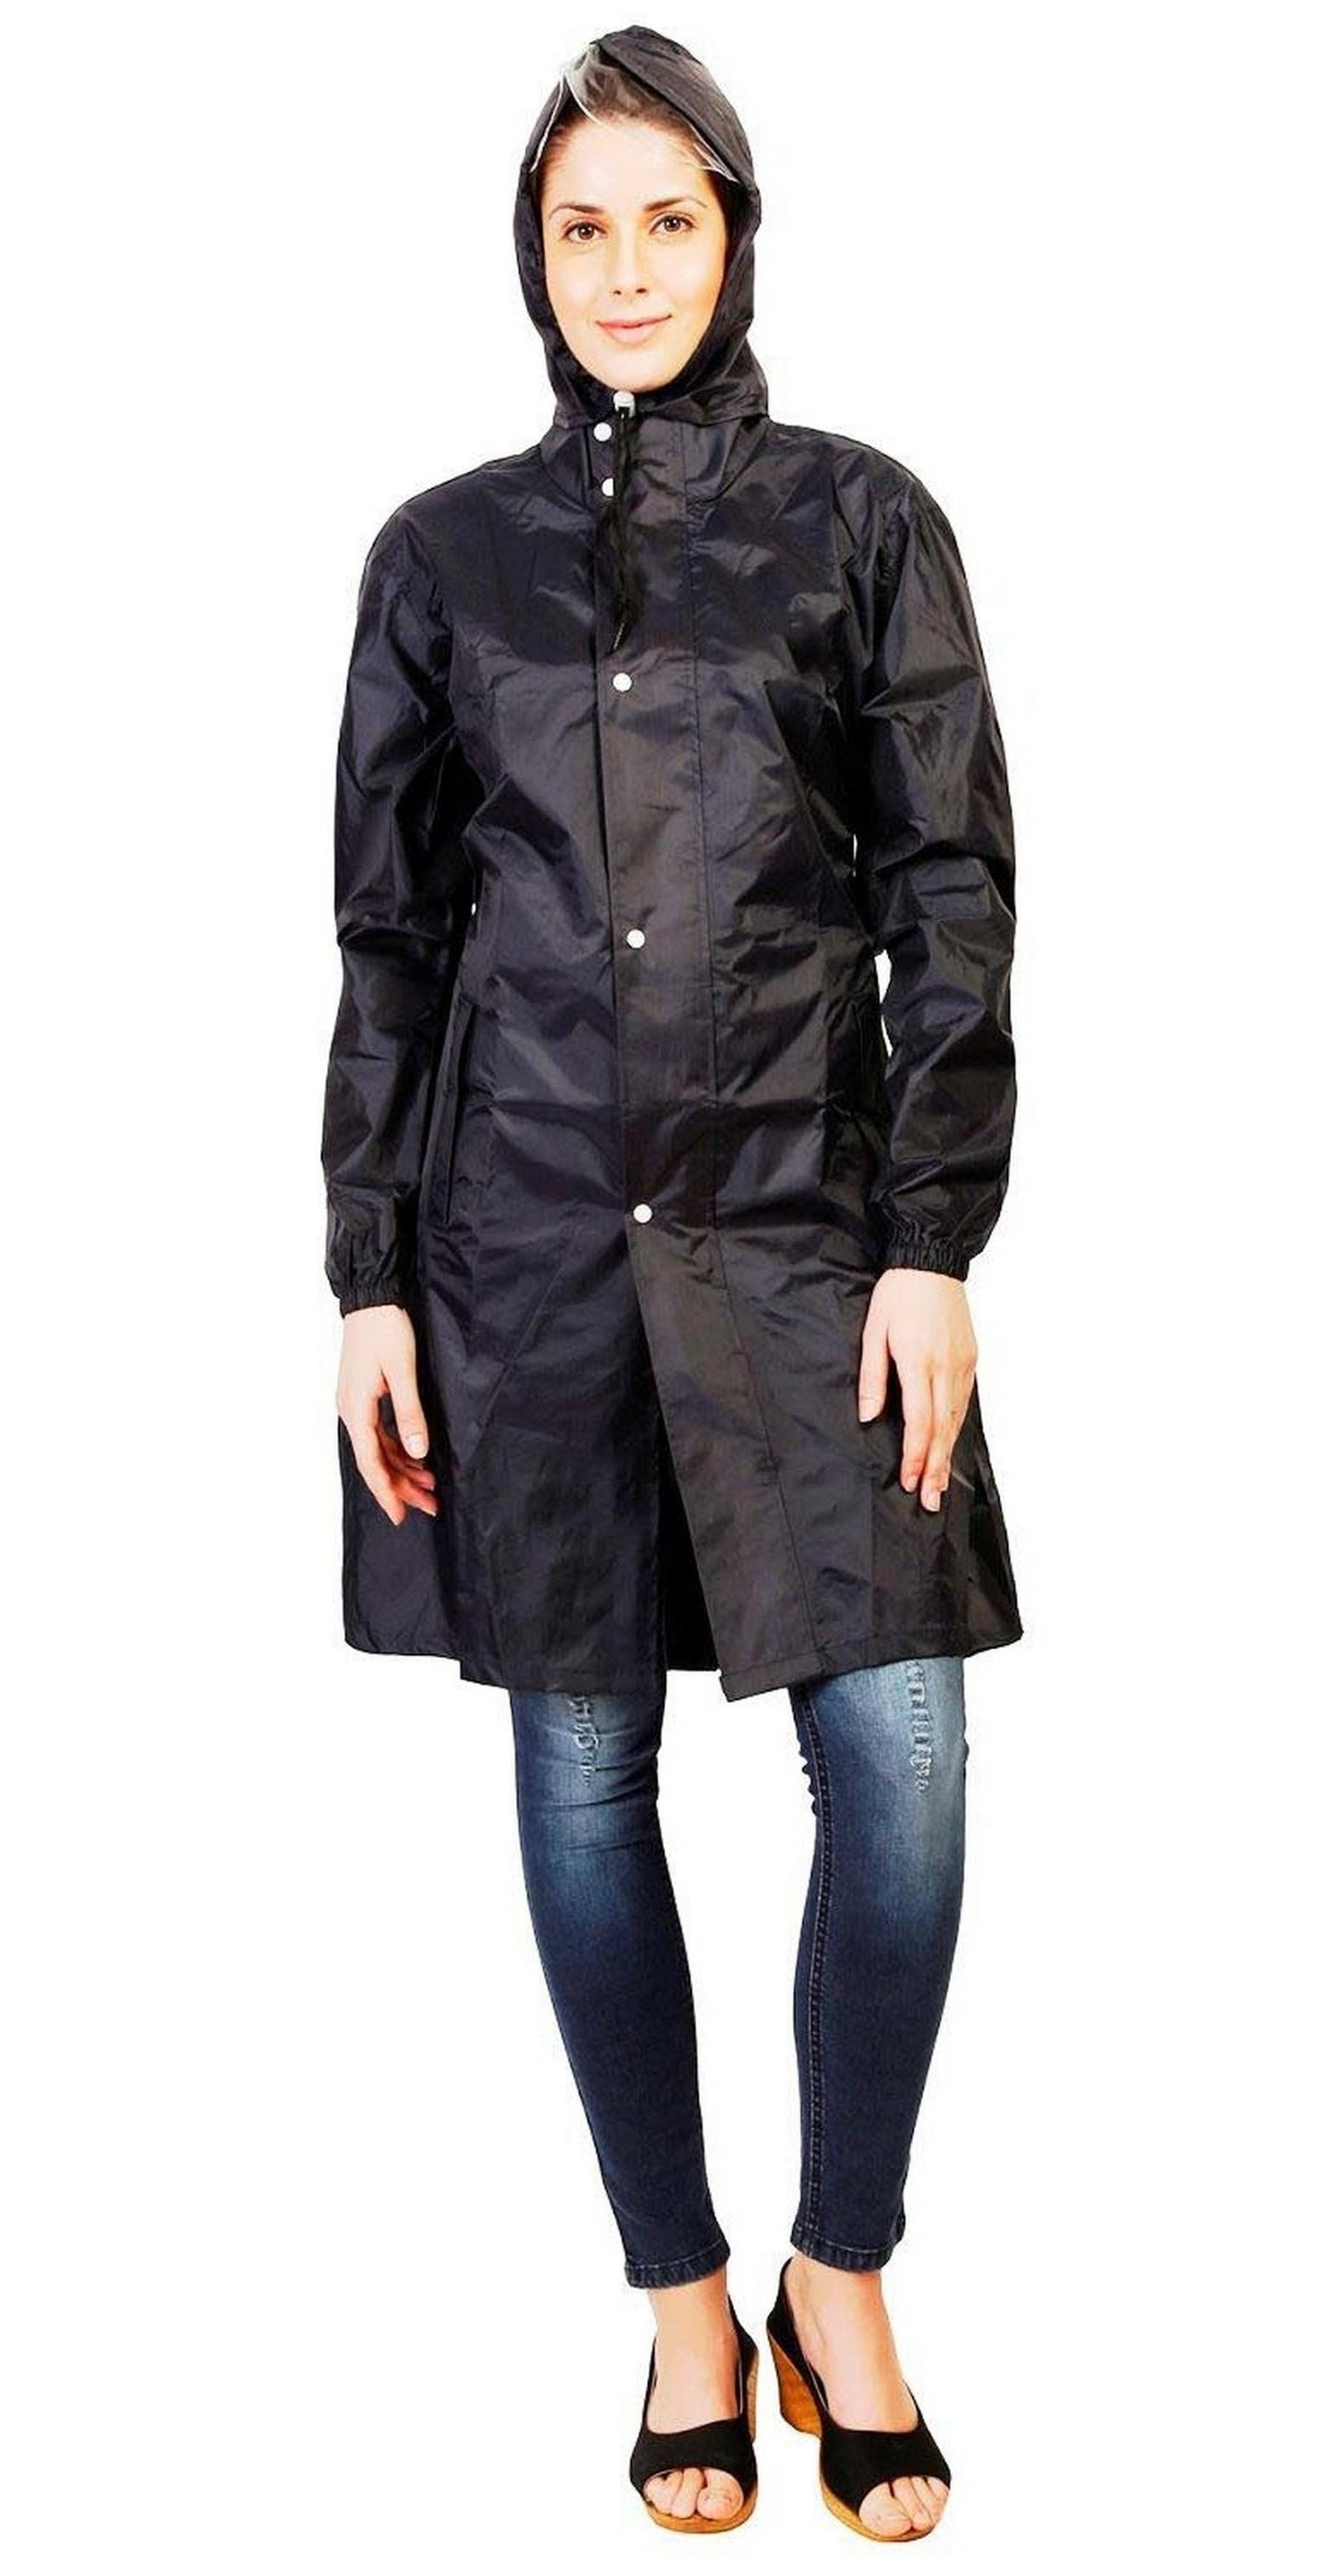 Romano nx 100% Waterproof Premium Quality Heavy Duty Double Layer Hooded Long Raincoat Women in a Storage Bag romanonx.com 